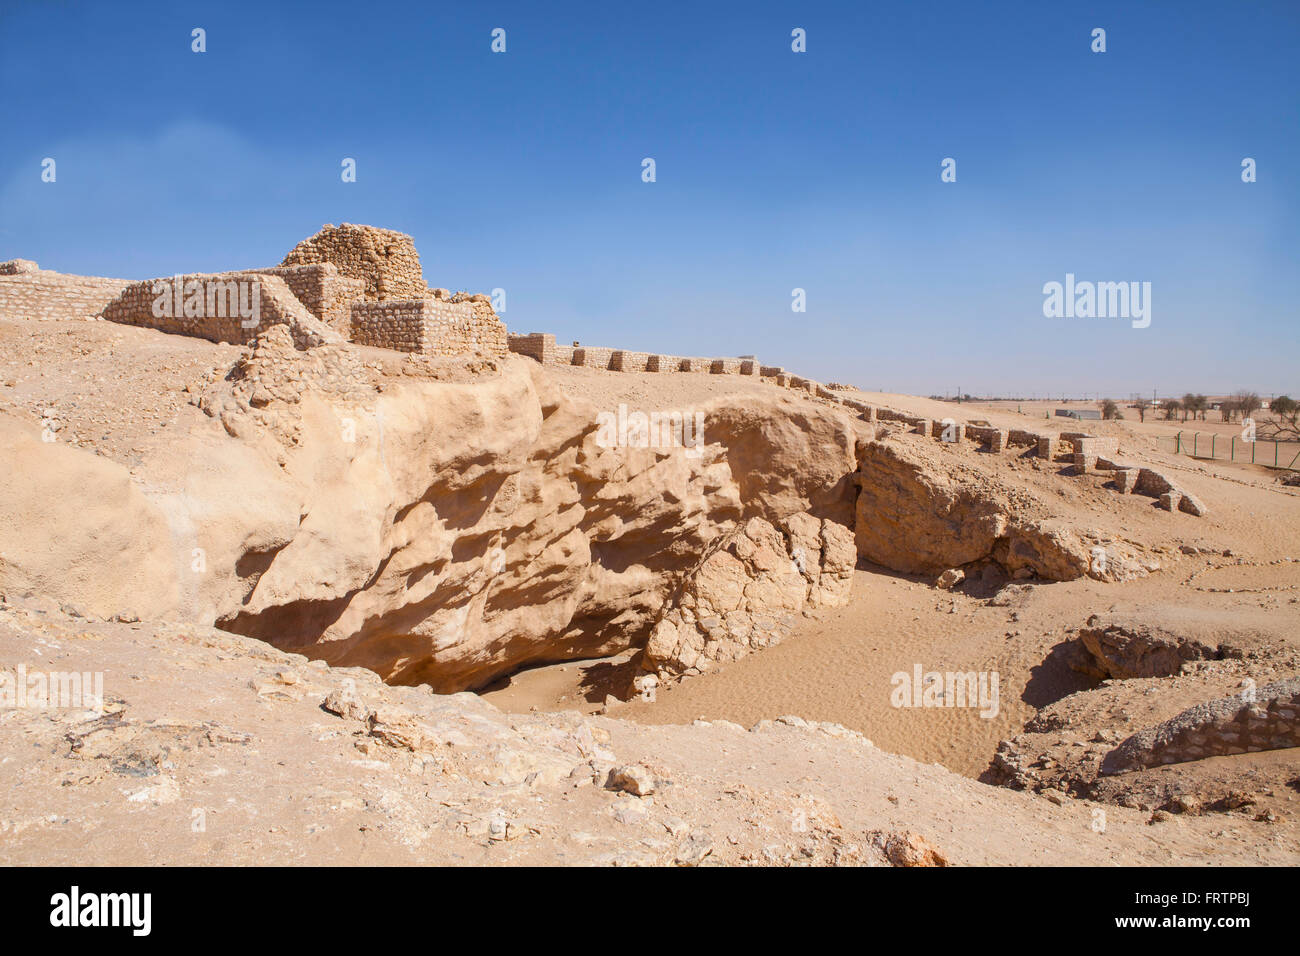 Die antike Stadt Ubar, Shisr in Dhofar-Region, Oman. Stockfoto